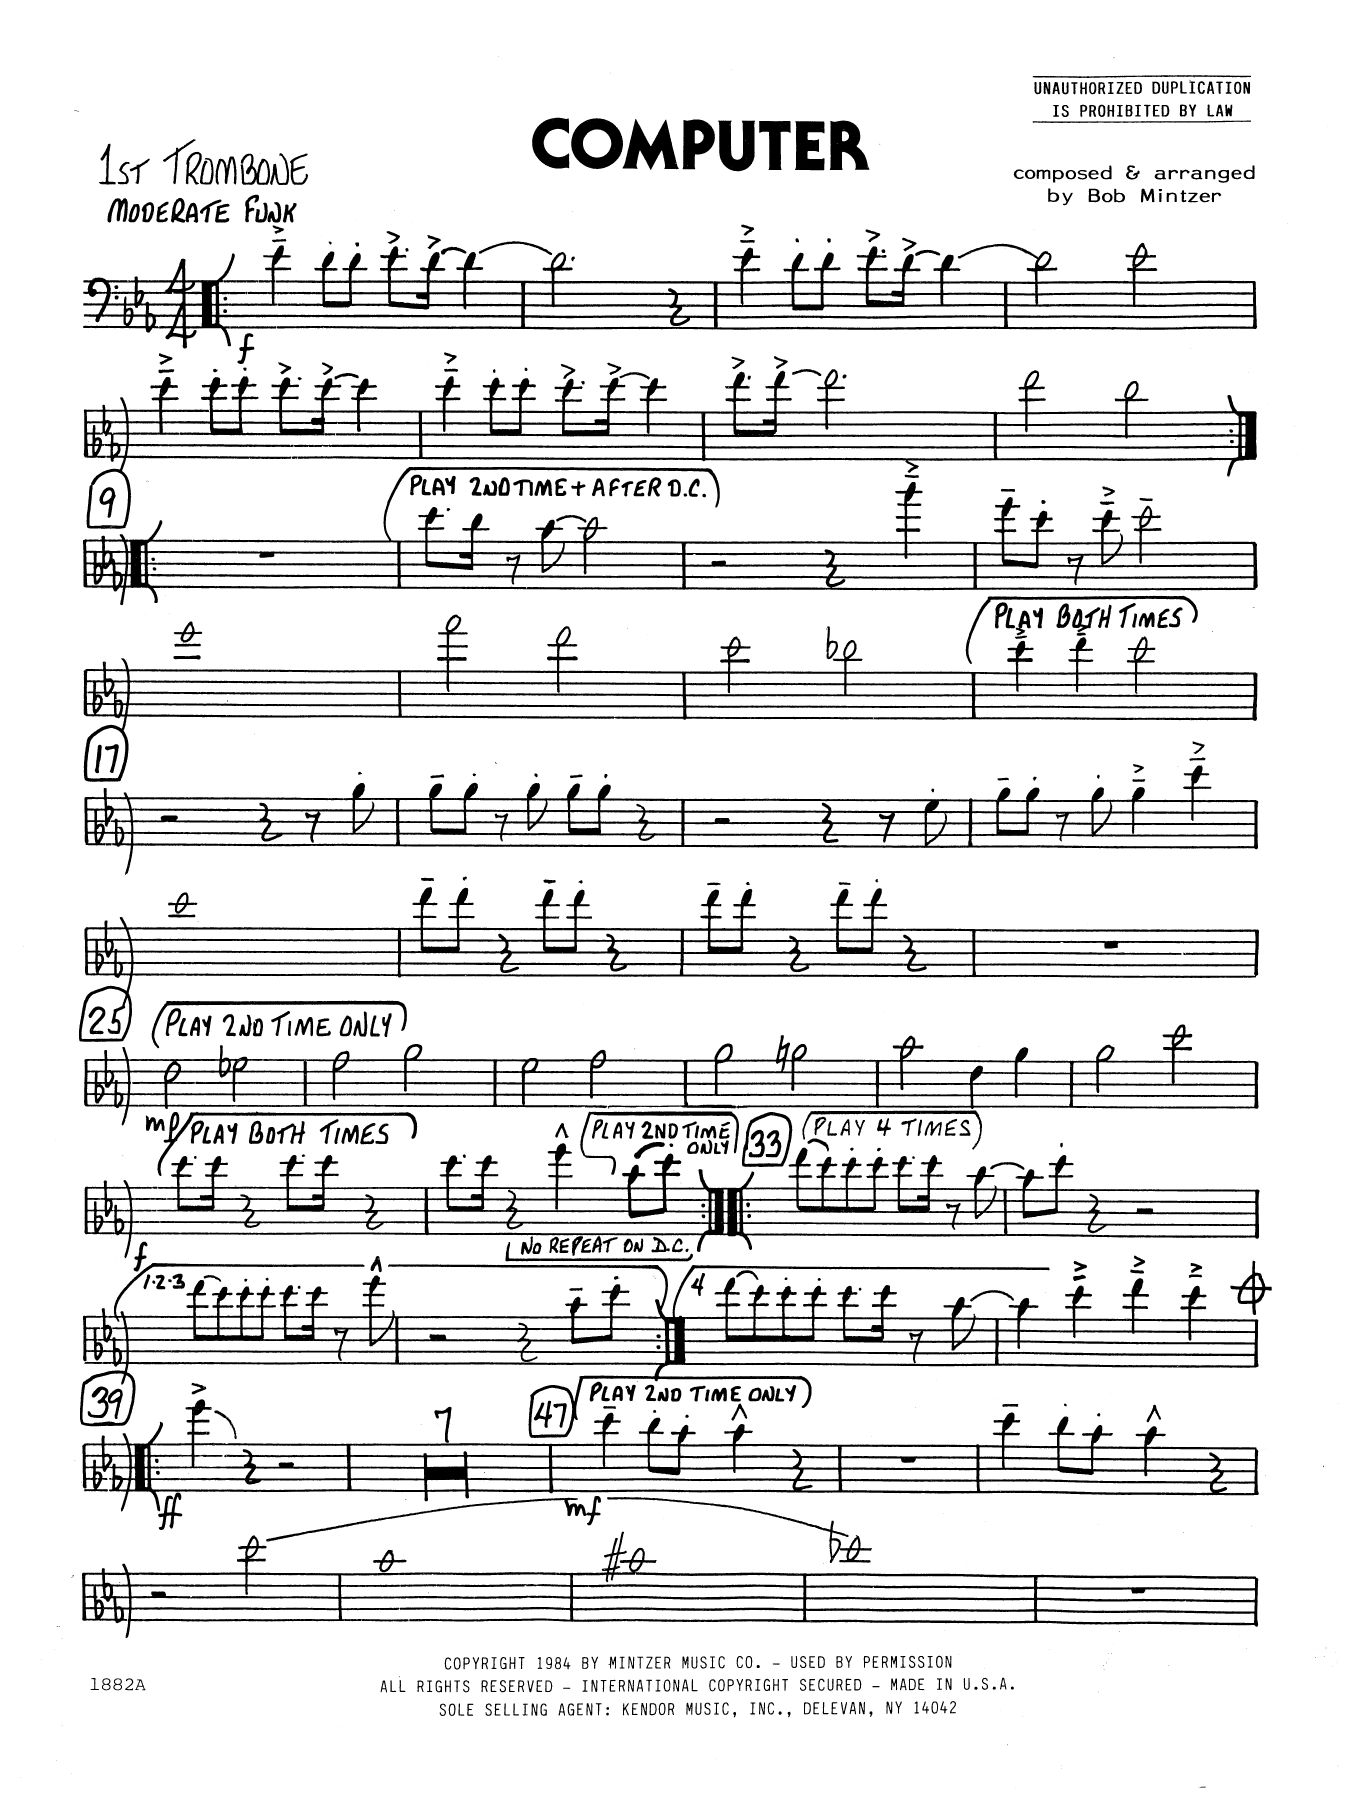 Download Bob Mintzer Computer - 1st Trombone Sheet Music